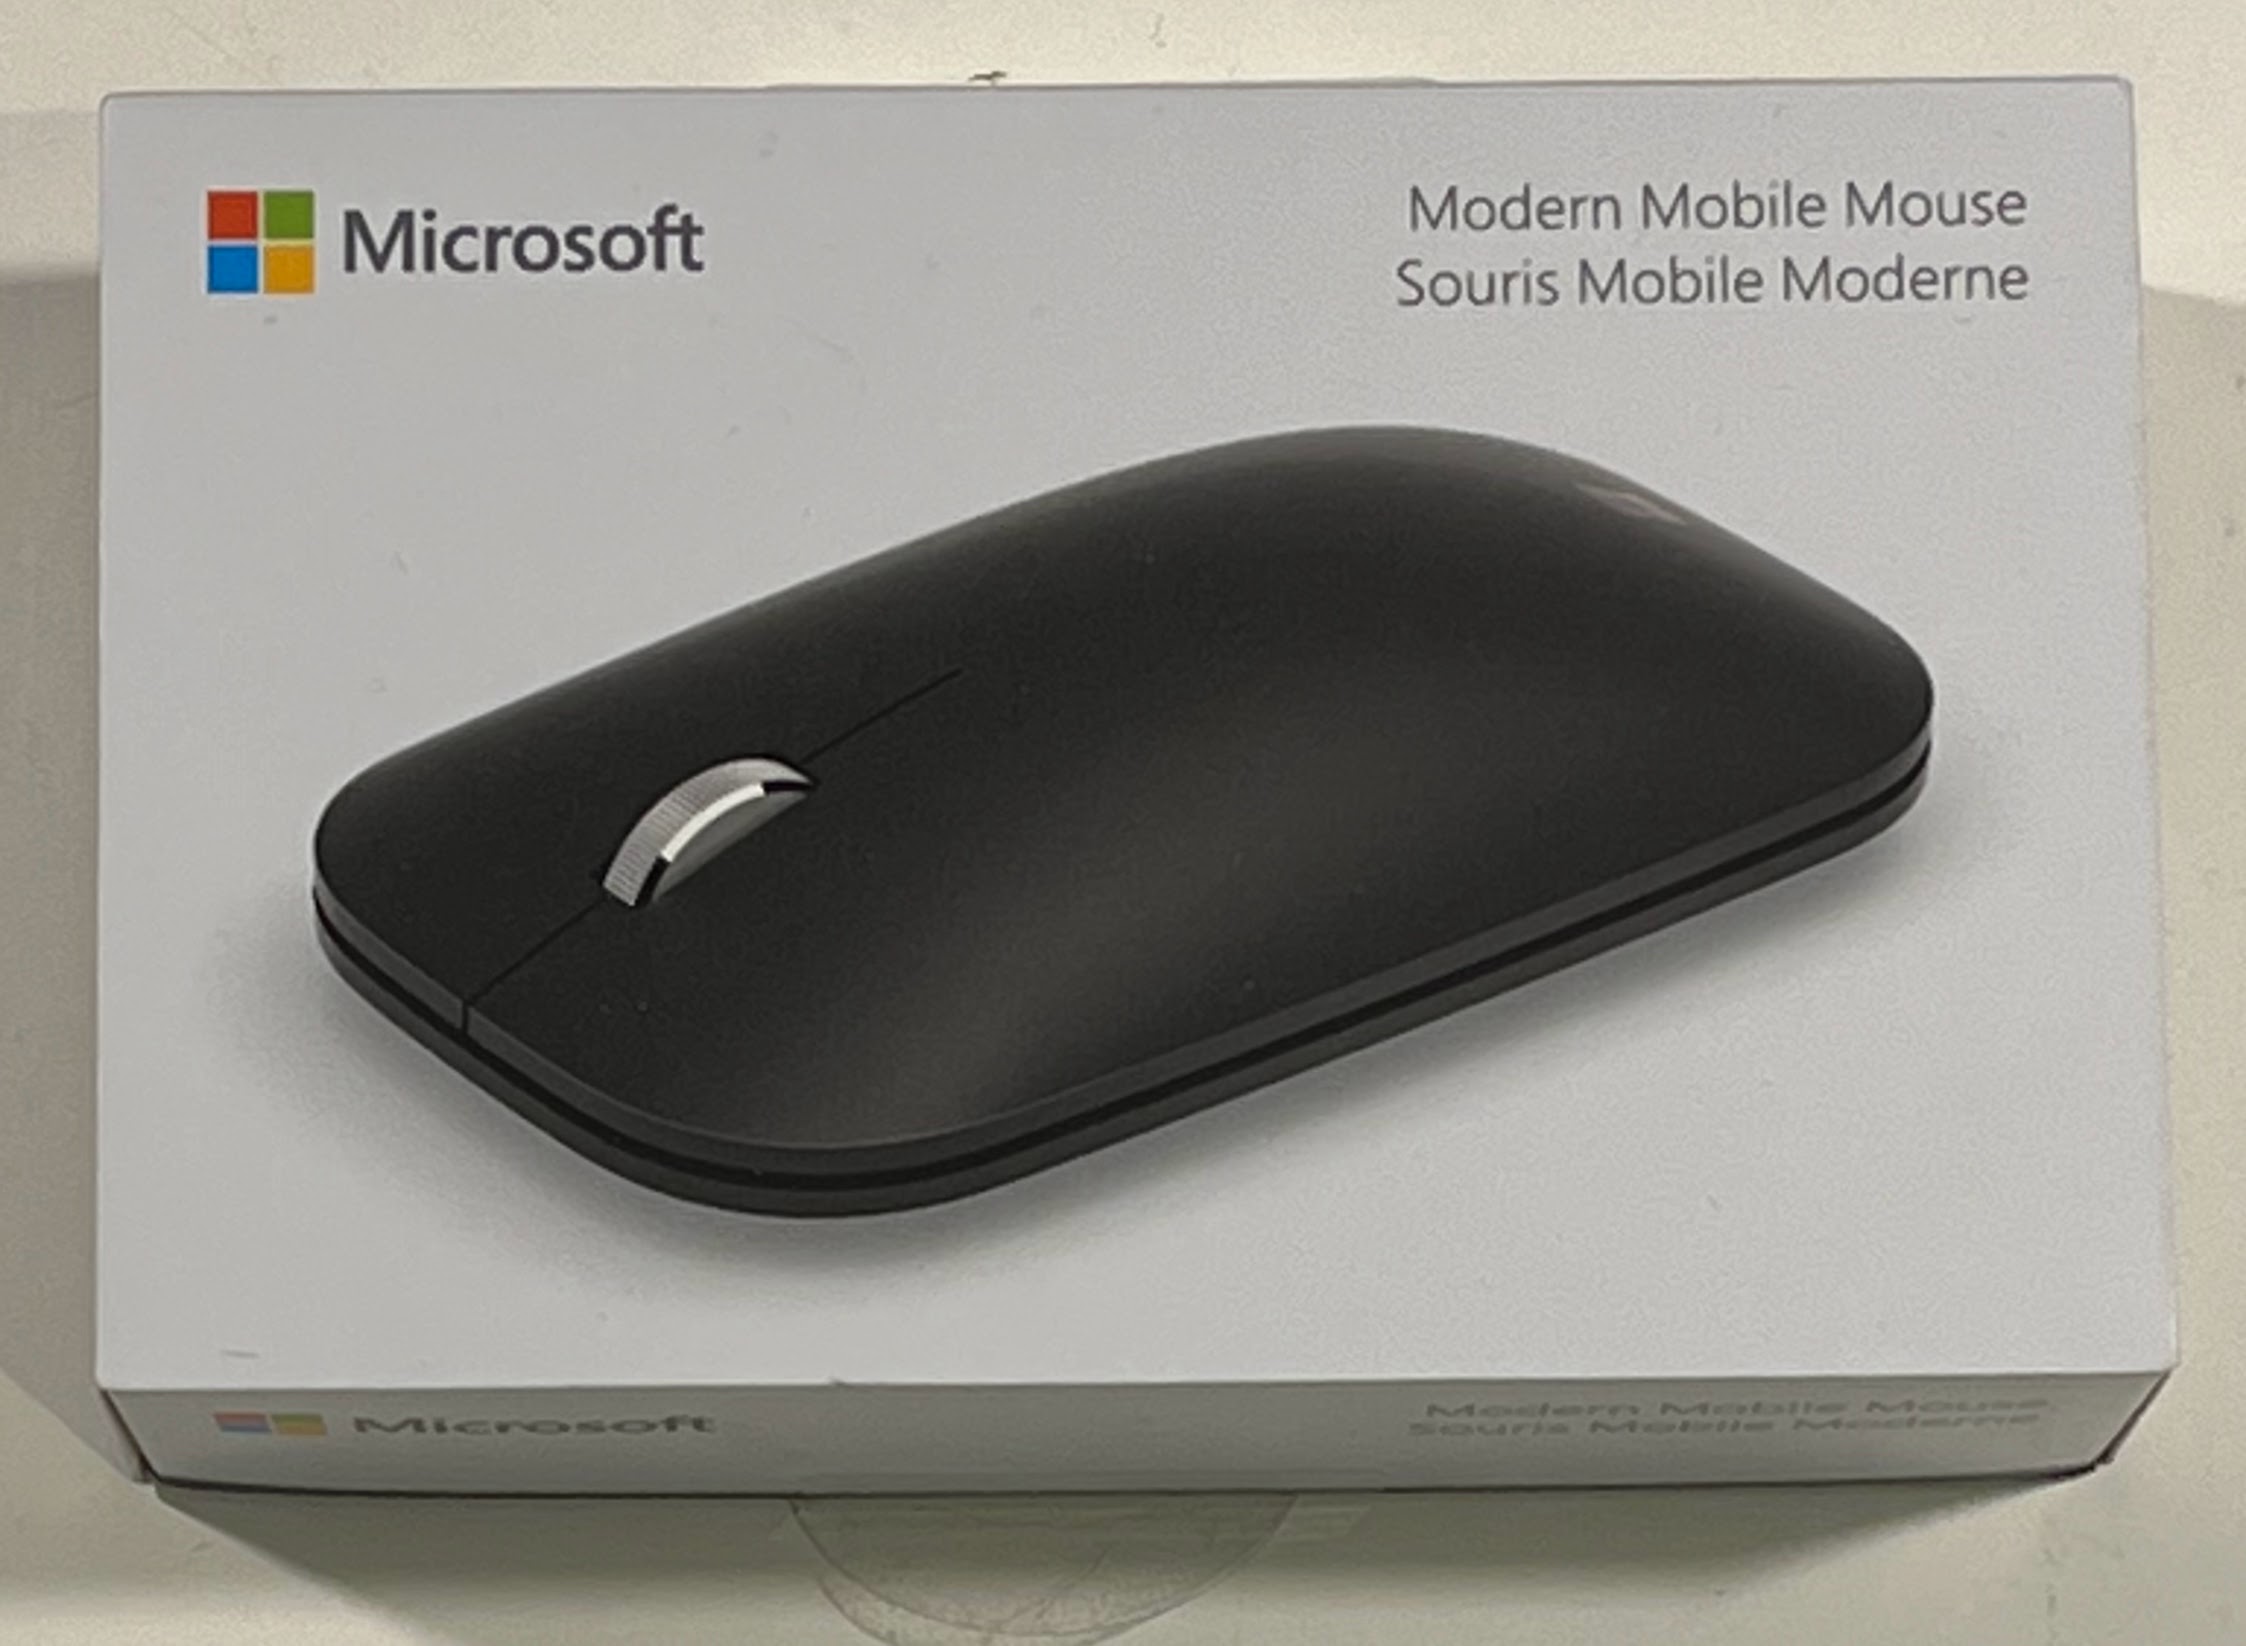 Souris Modern Mobile Mouse